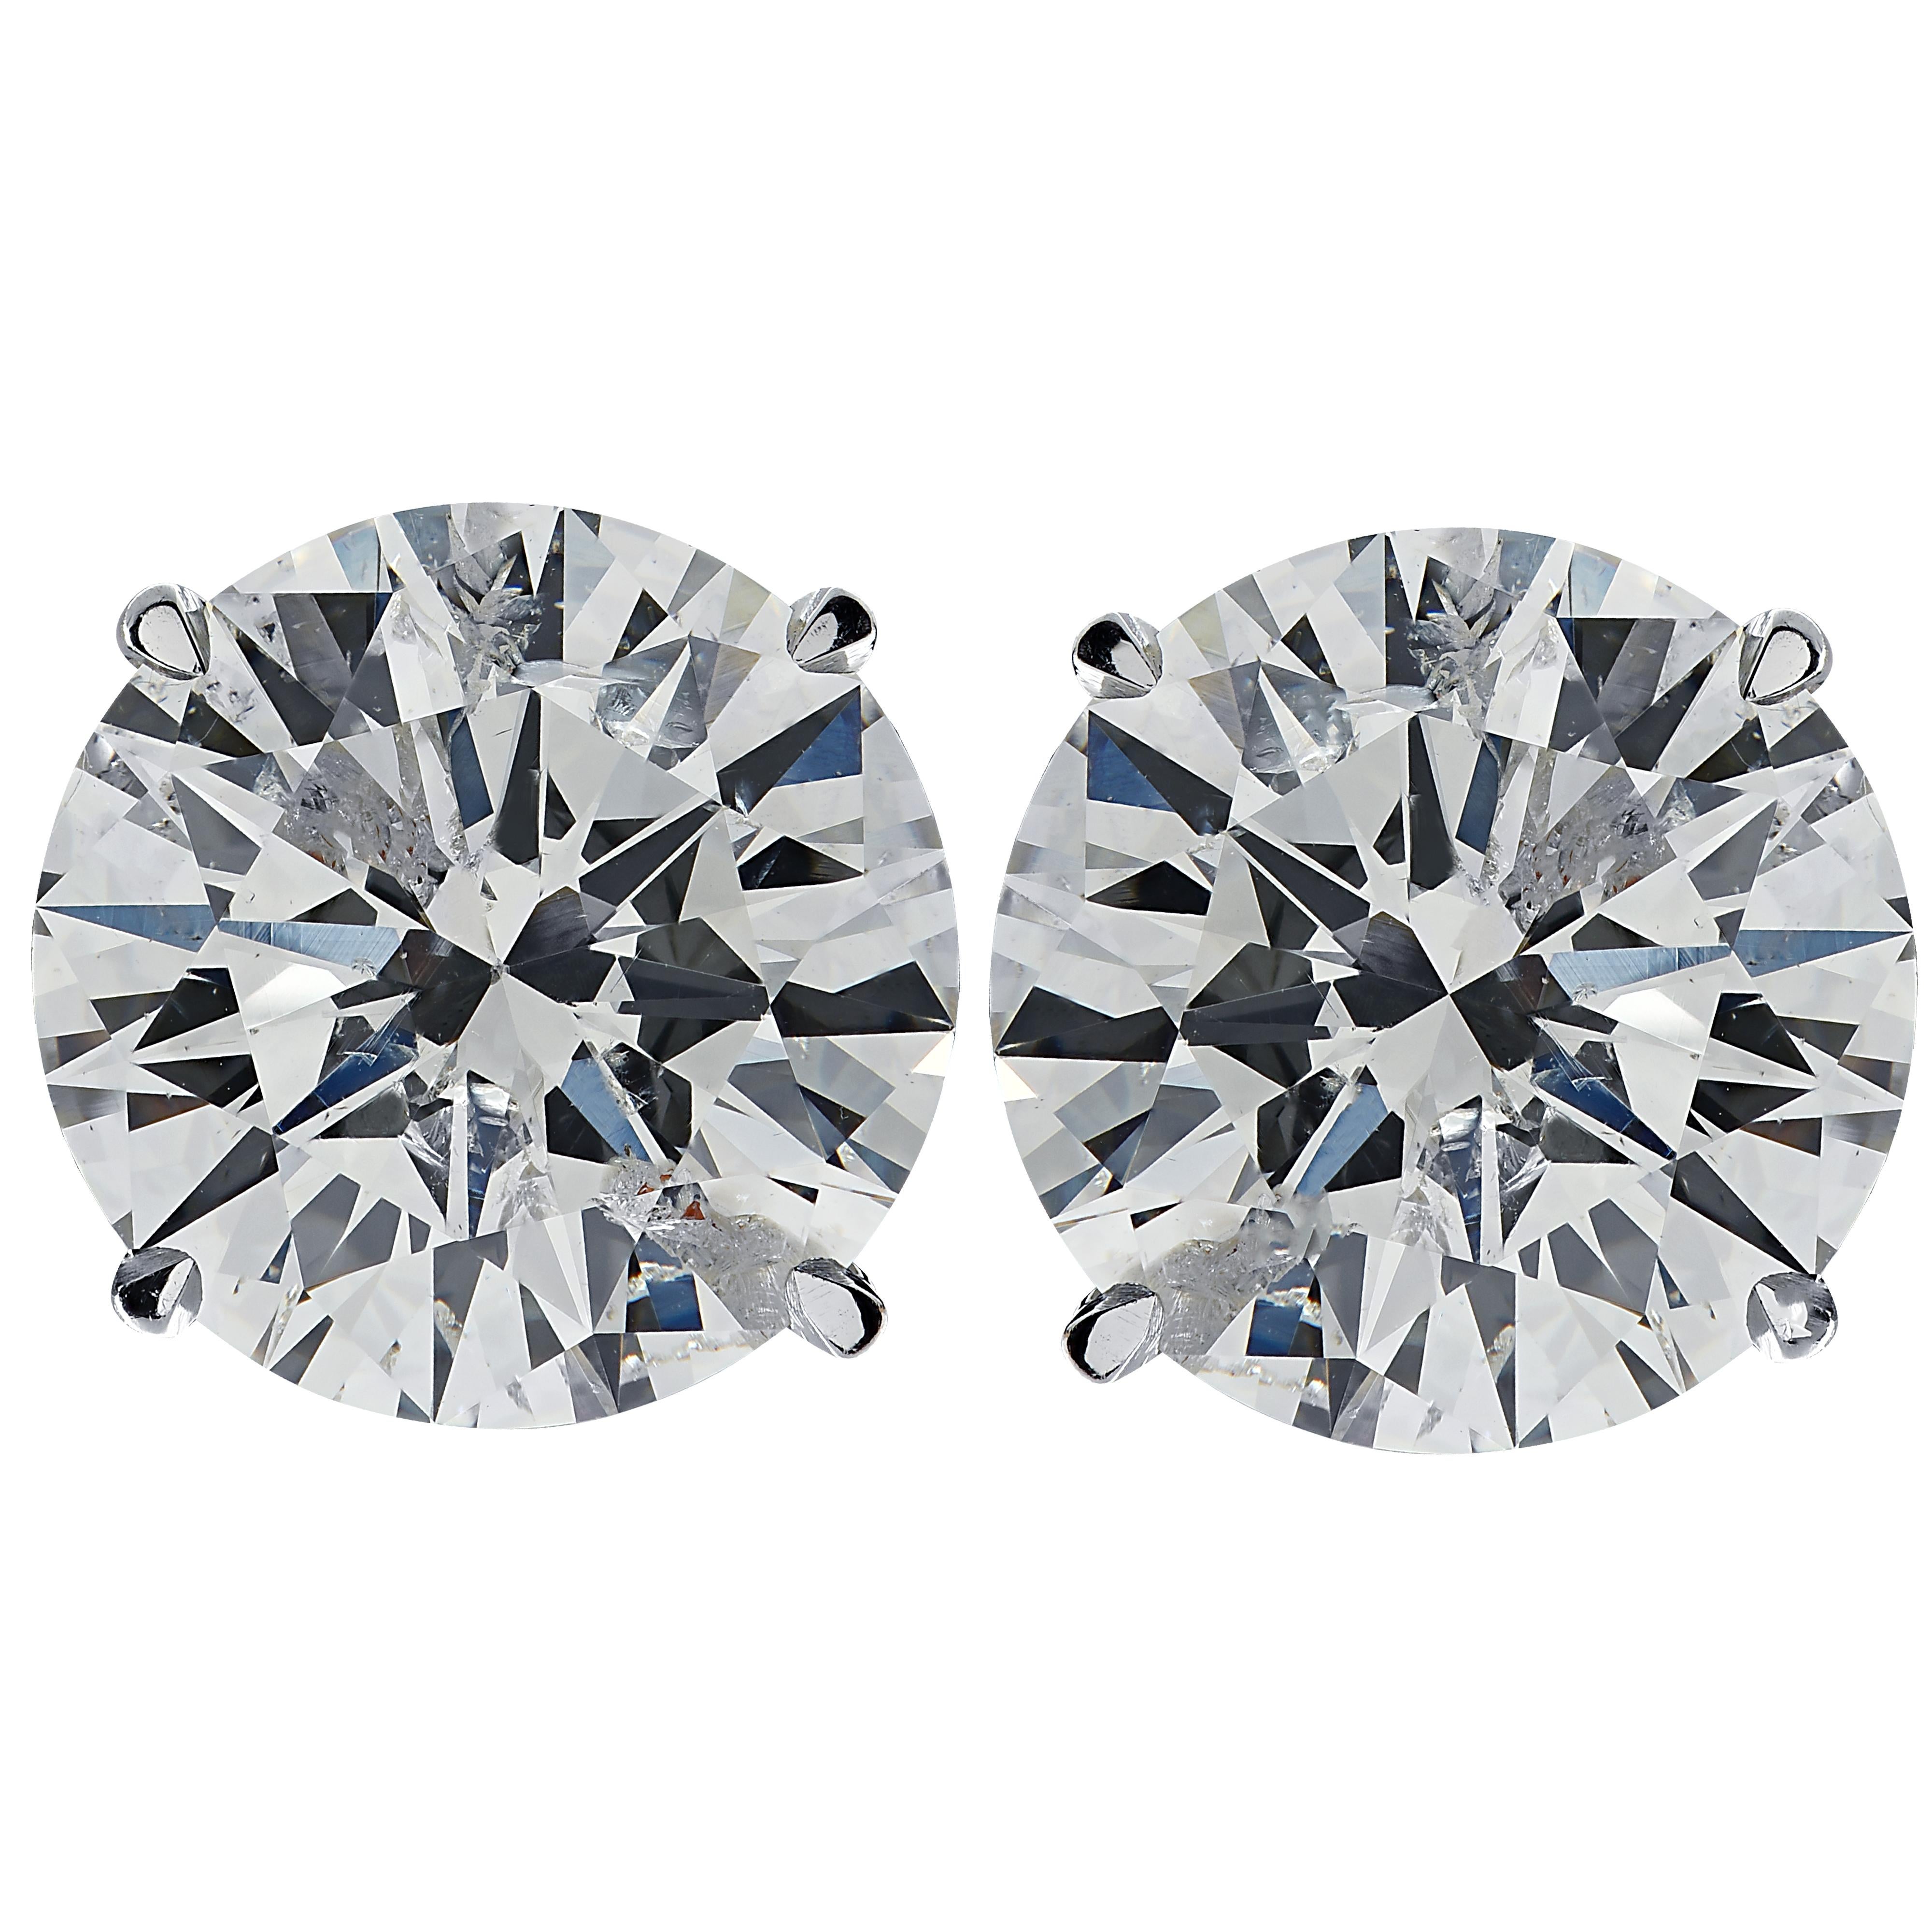 Round Cut Vivid Diamonds GIA Certified 2.02 Carat Diamond Solitaire Stud Earrings